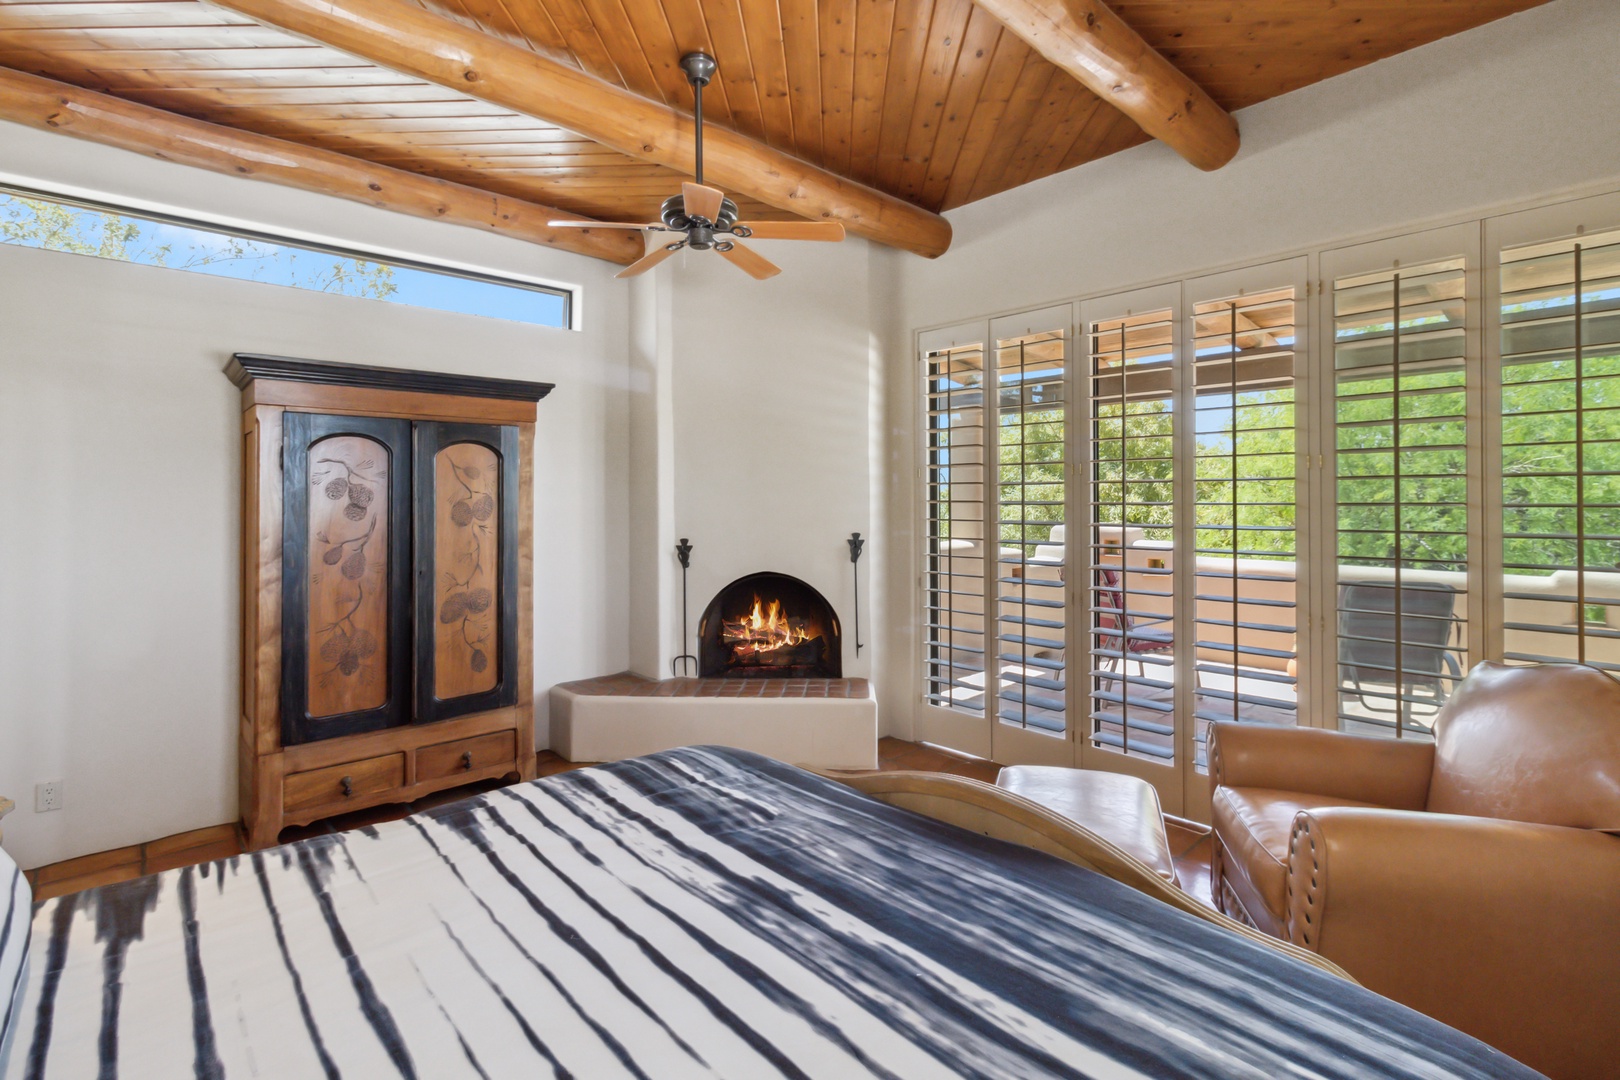 Scottsdale Vacation Rentals, Boulders Hideaway Villa - Second fireplace in guest bedroom